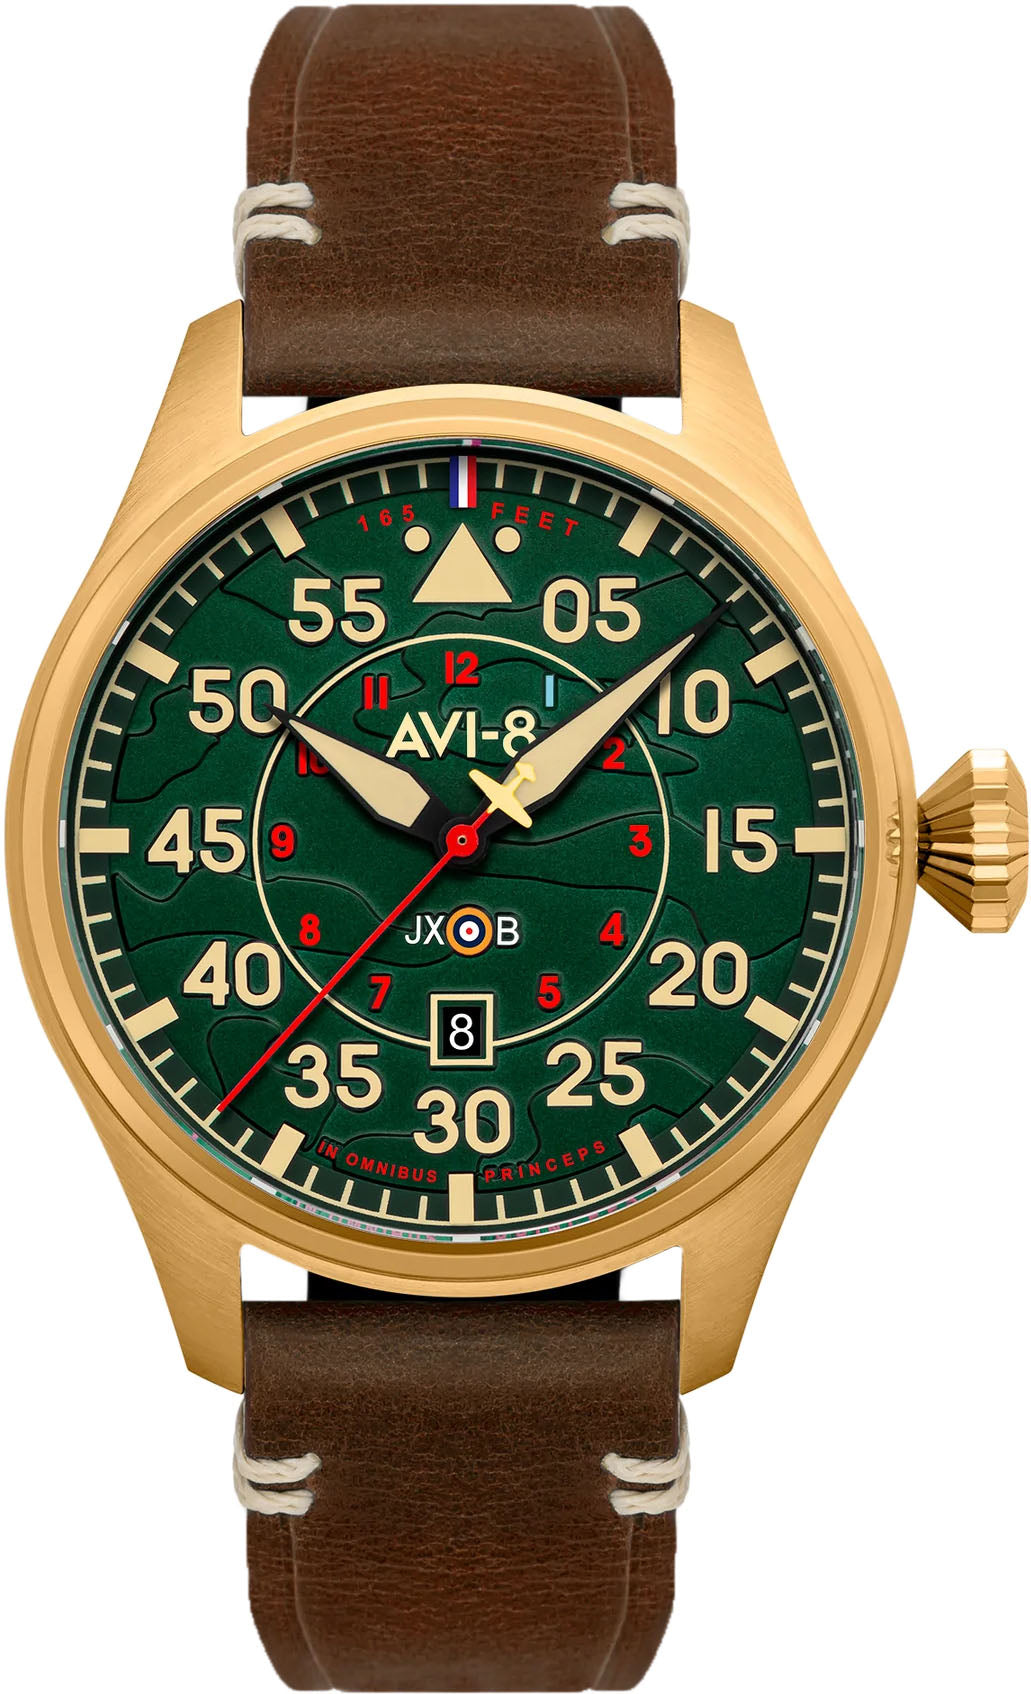 Photos - Wrist Watch AVI-8 Watch Hawker Hurricane Clowes Automatic - Green AV-160 